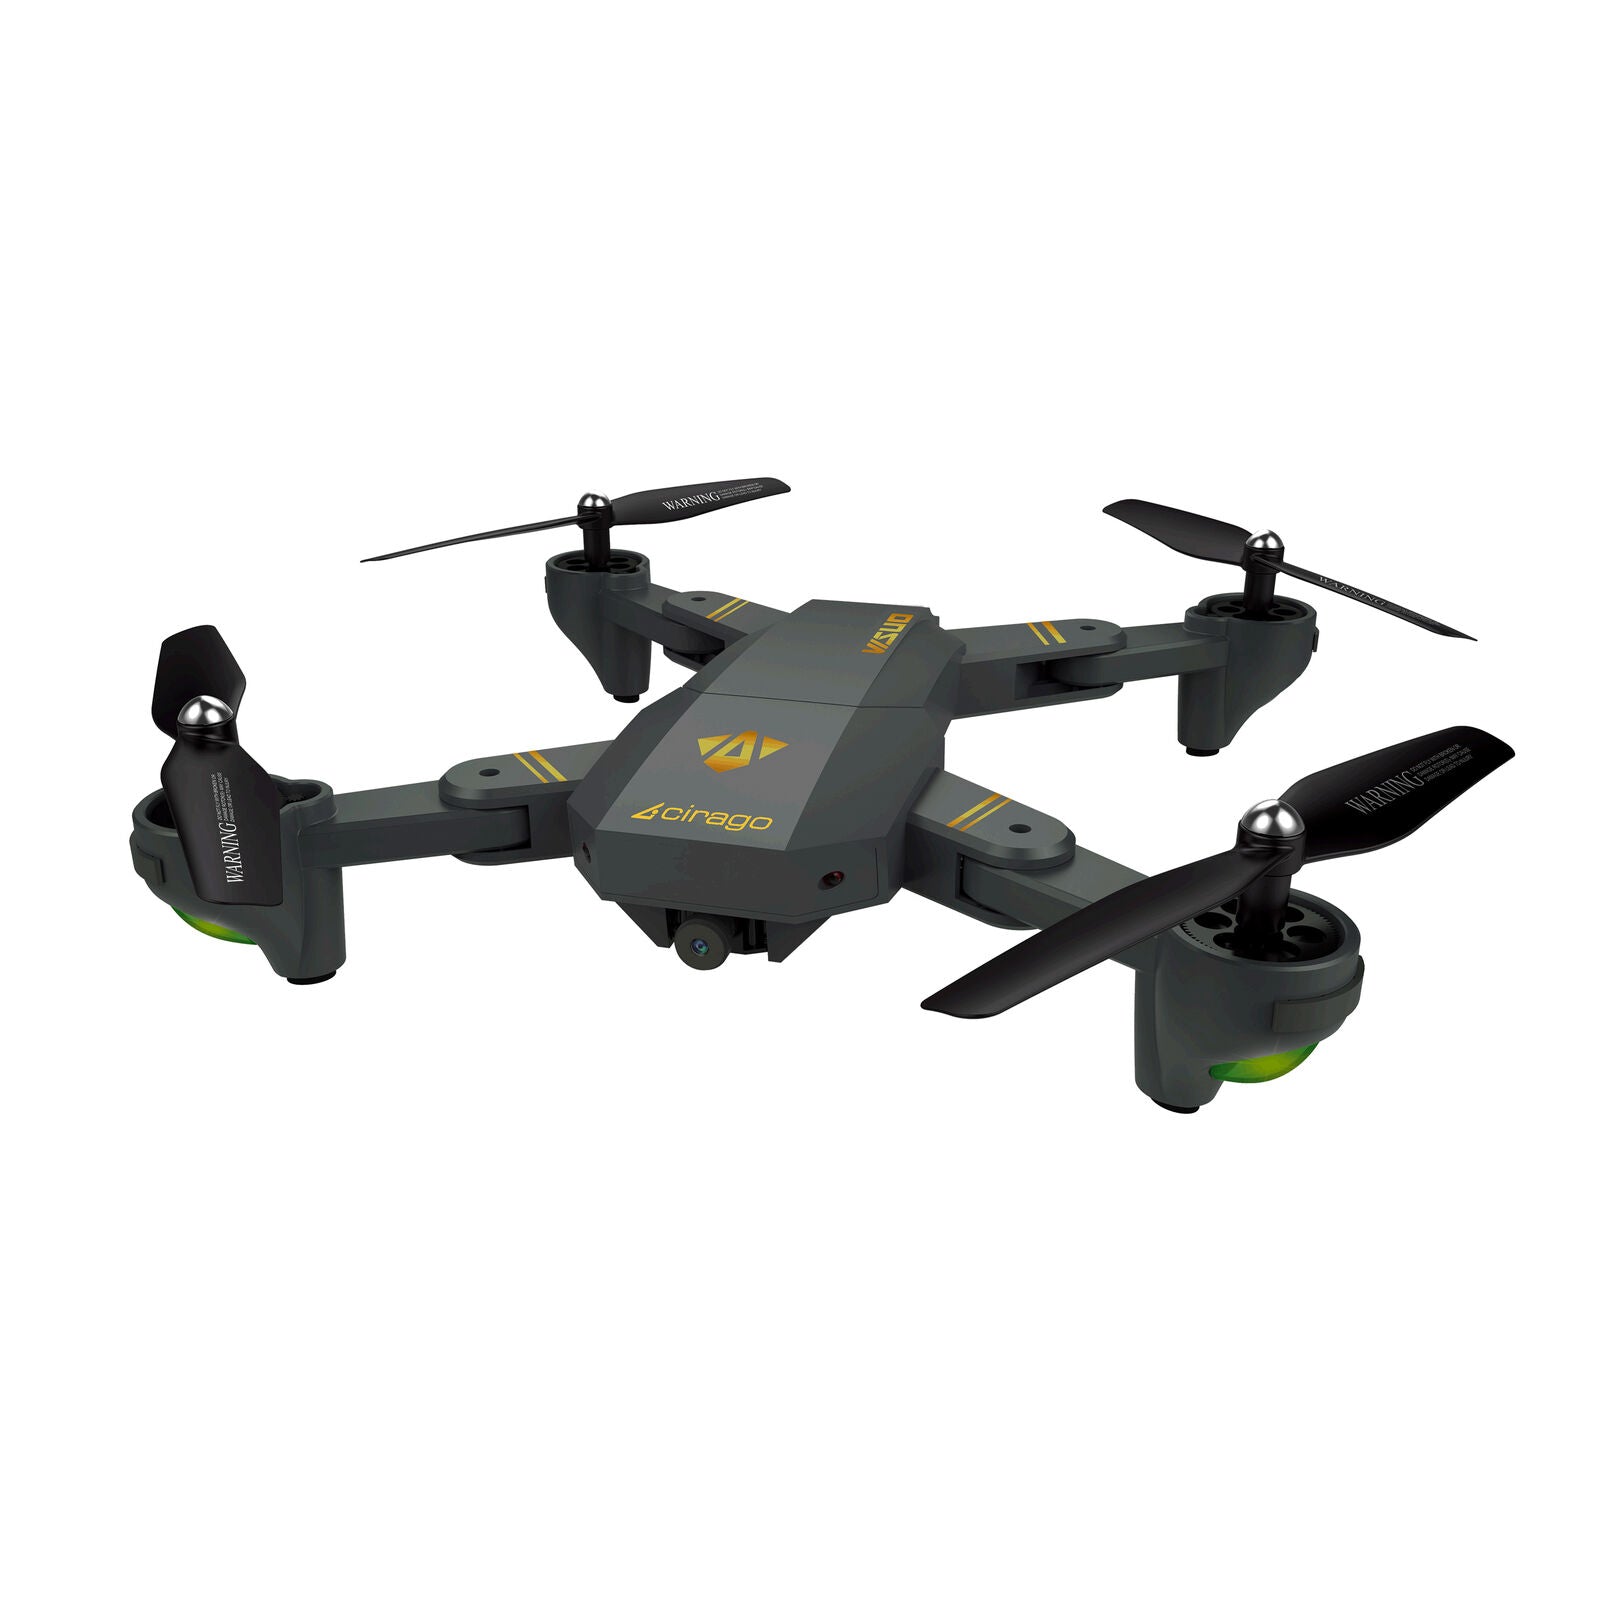 New 2021 RC Drone Selfie WIFI FPV Drone HD Wide Angle Camera Quadcopter